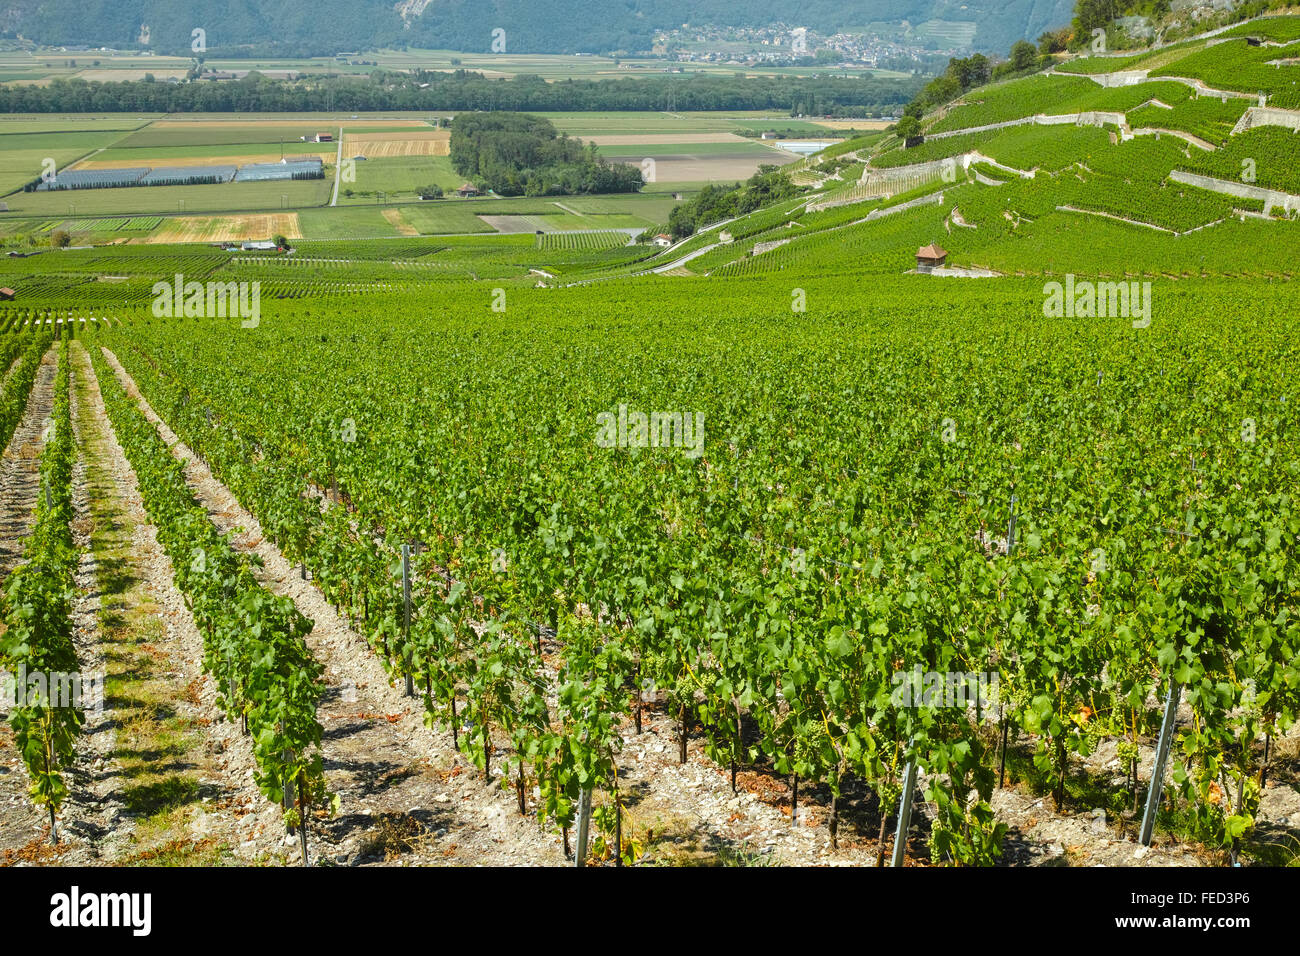 Yvorne, Lavaux region, Vineyards and Chateau Maison Blanche, Switzerland. Stock Photo